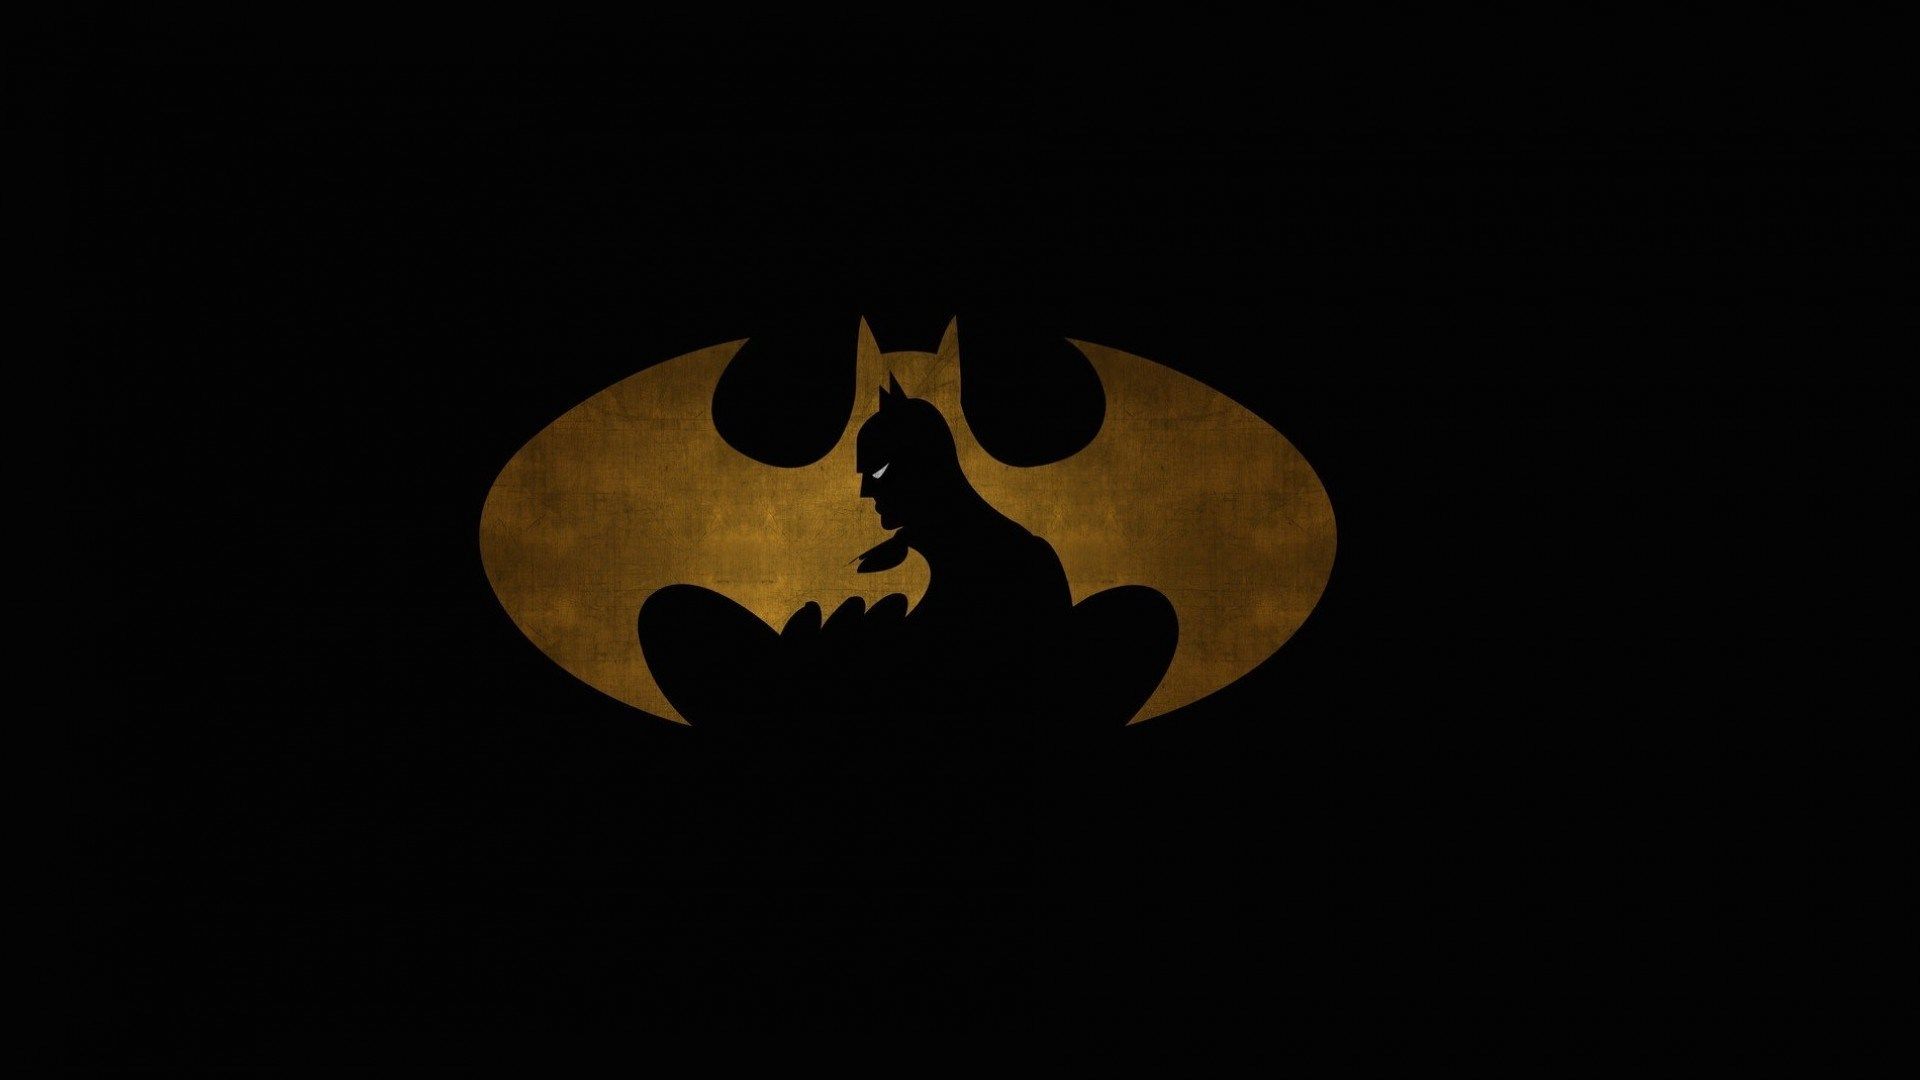 Batman logo wallpaper for desktop 1080p 128